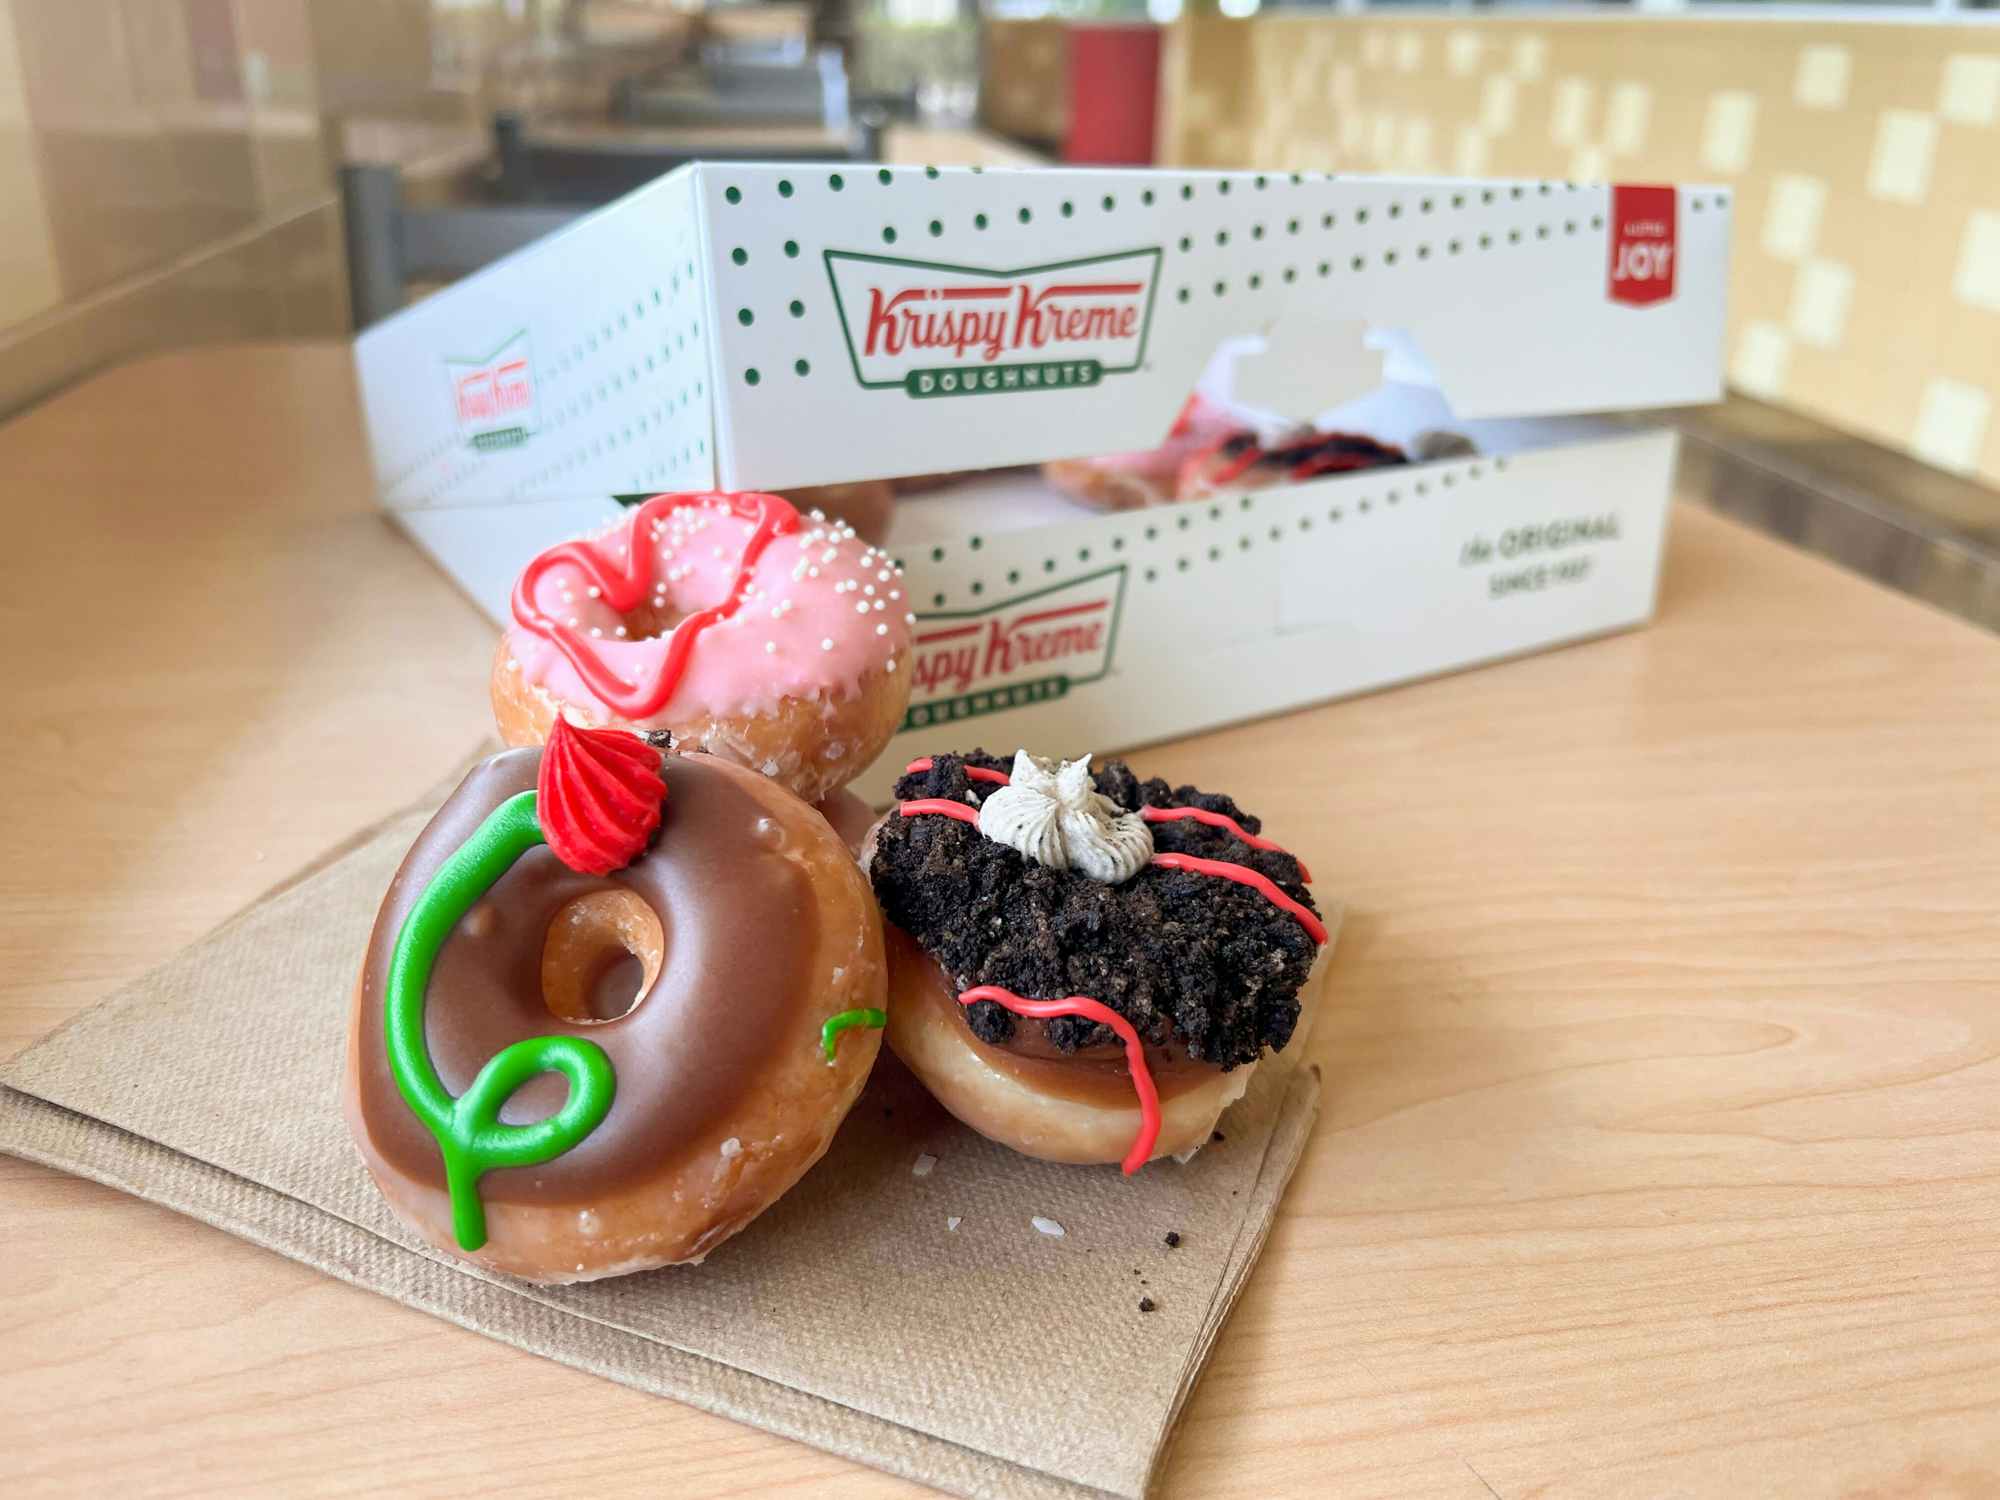 Some Mother's Day Krispy Kreme doughnuts sitting on a napkin next to a Krispy Kreme box